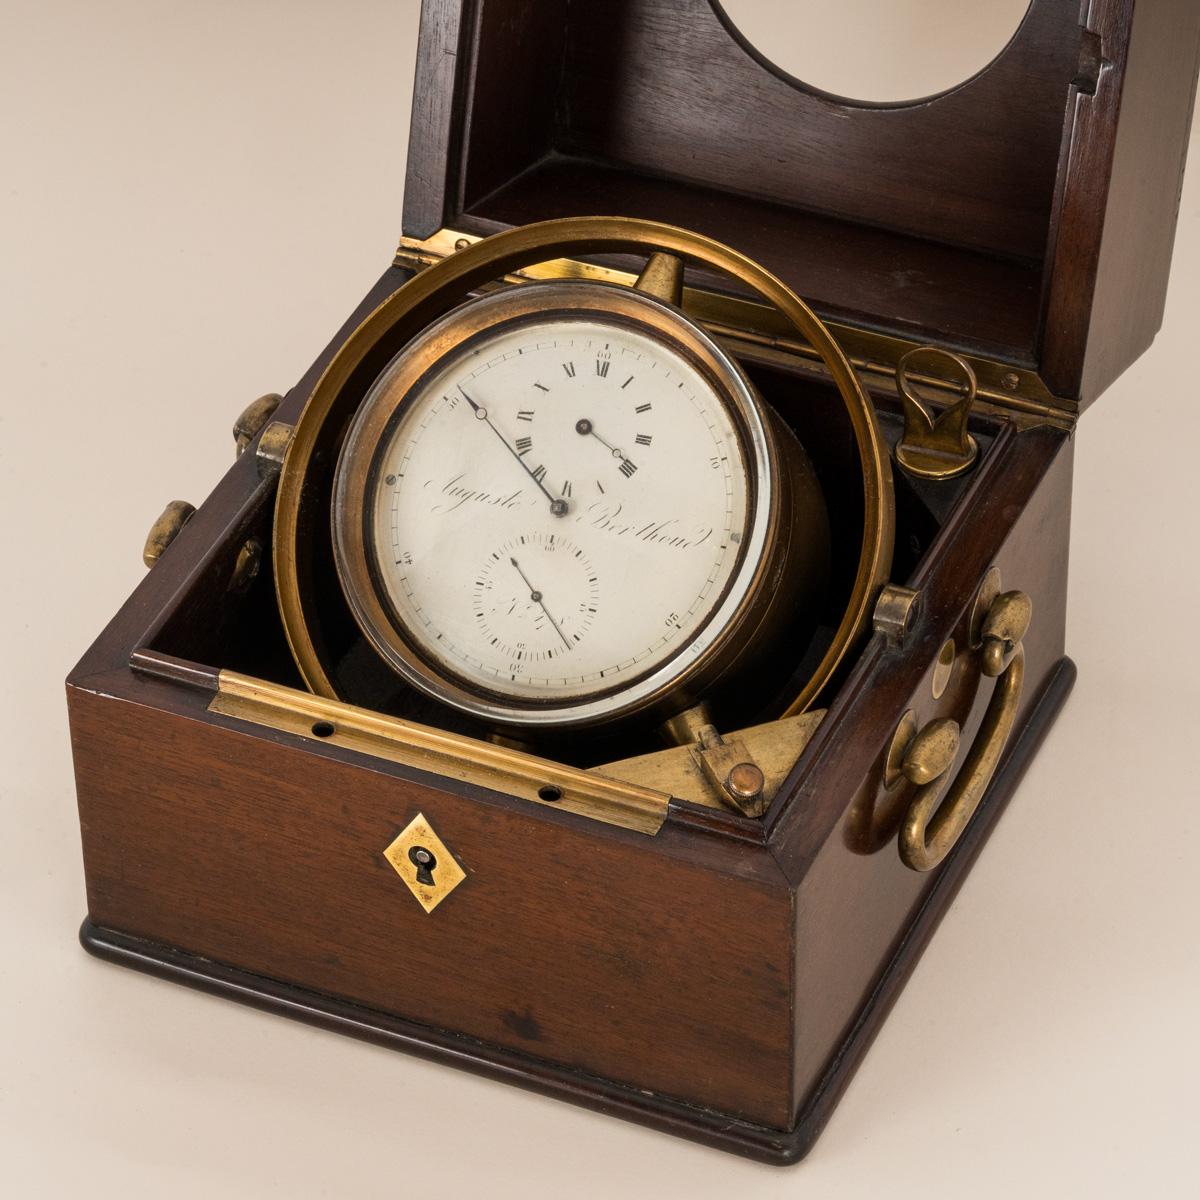 Auguste Berthoud. A Rare Antique Experimental Marine Chronometer C1840 For Sale 1